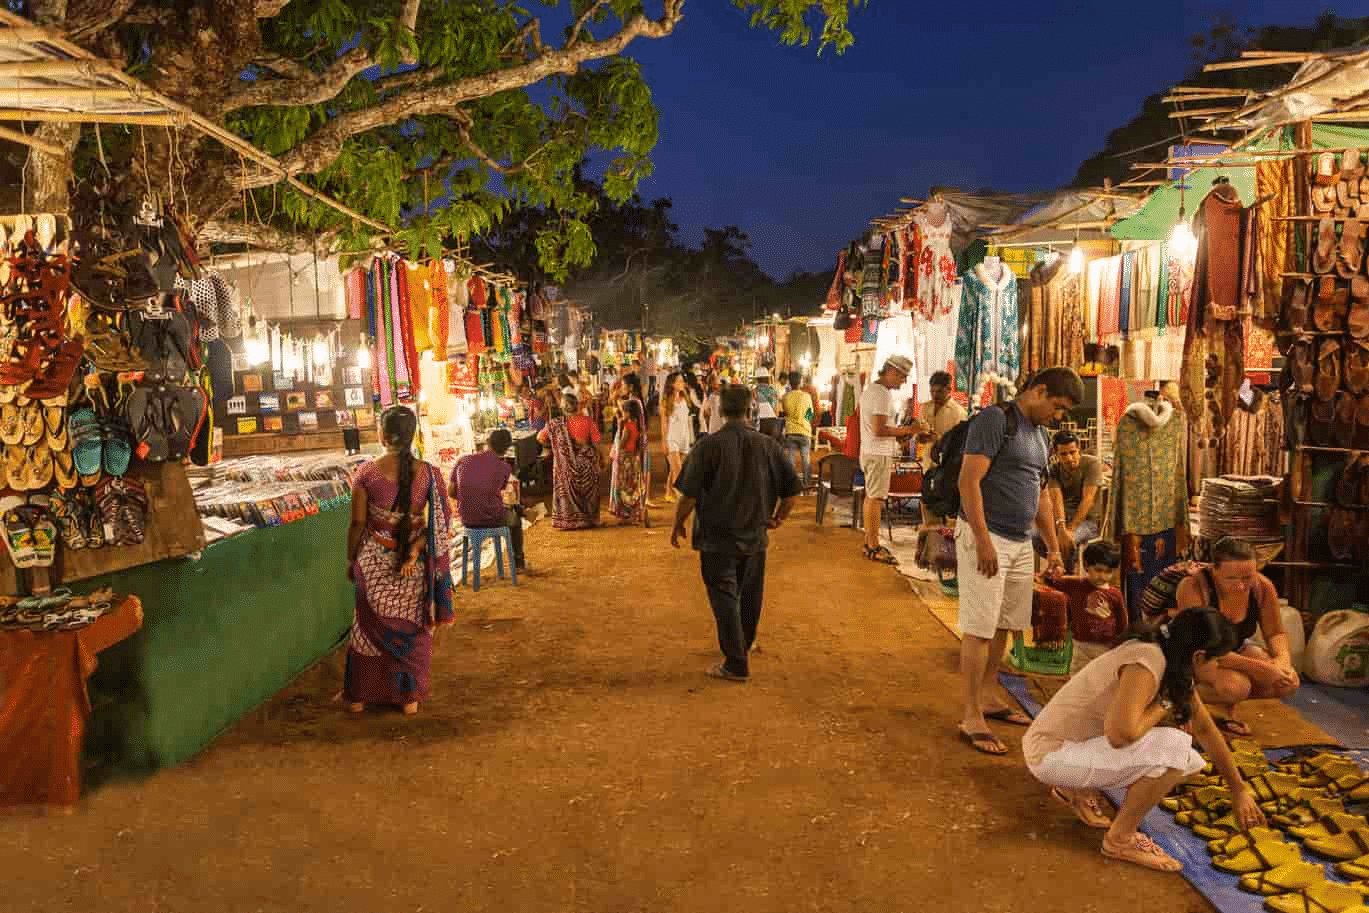 The Saturday Night Market